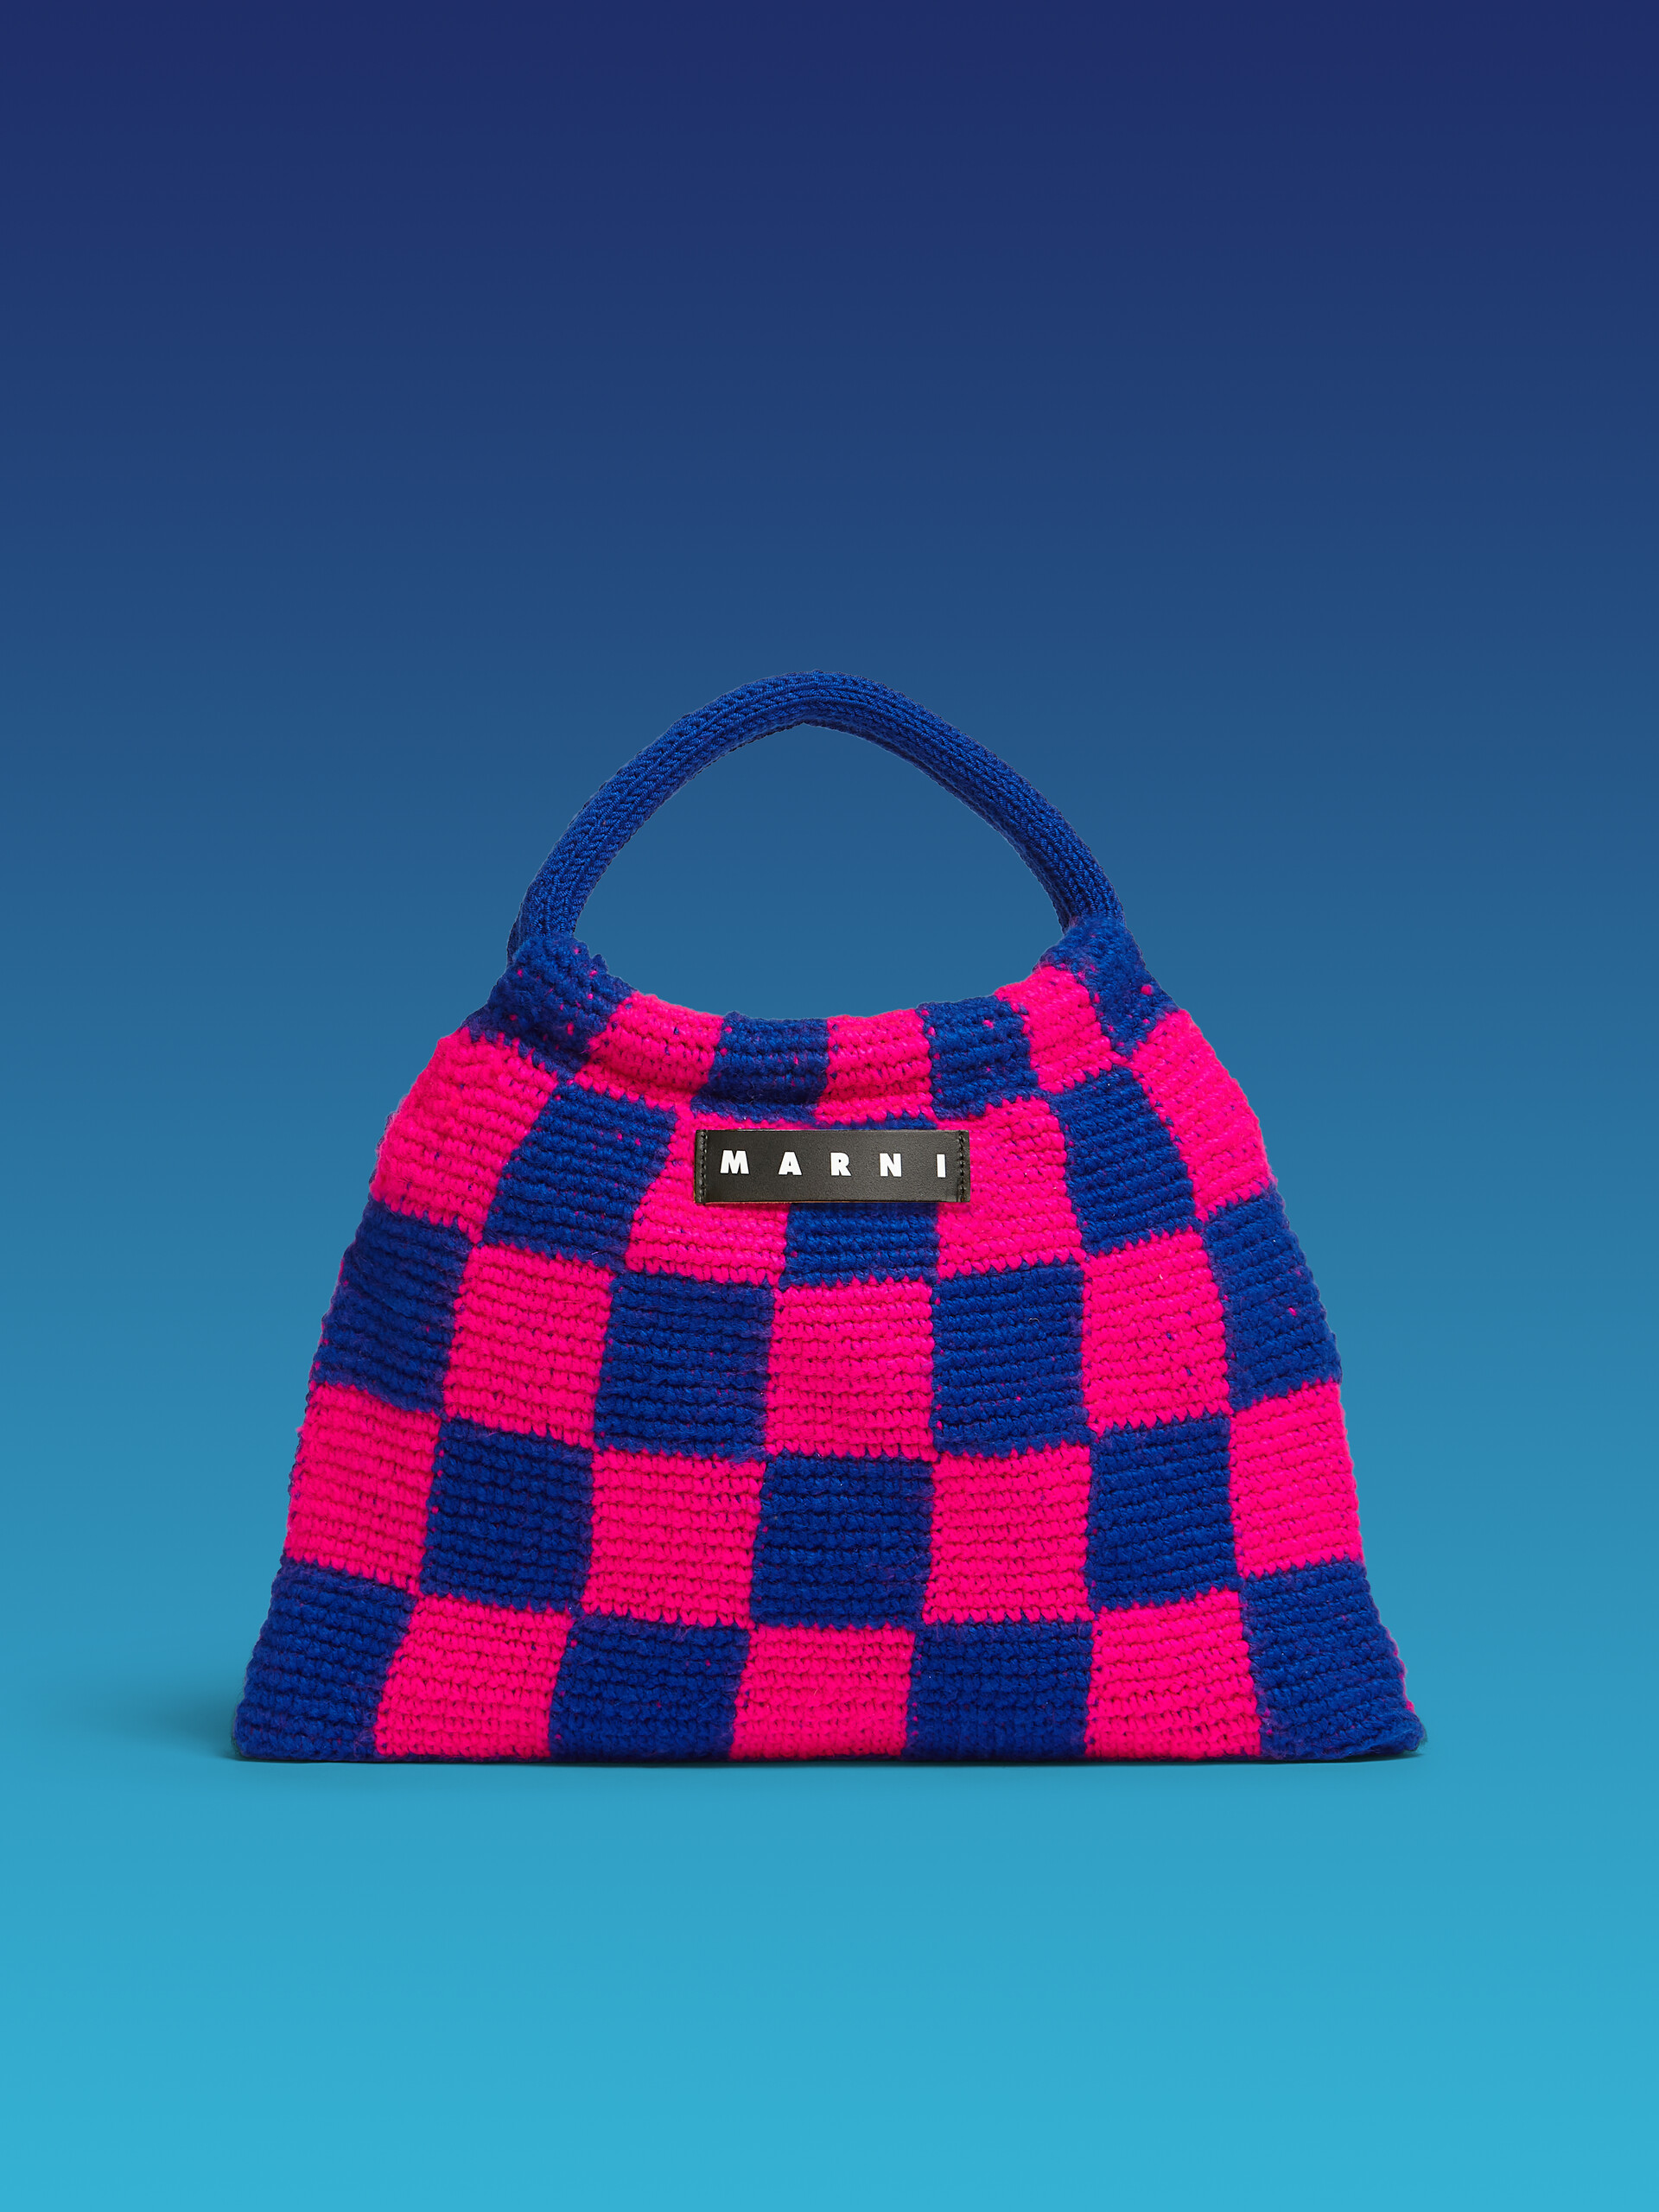 Borsa MARNI MARKET GRANNY in crochet rosa e blu - Borse shopping - Image 1